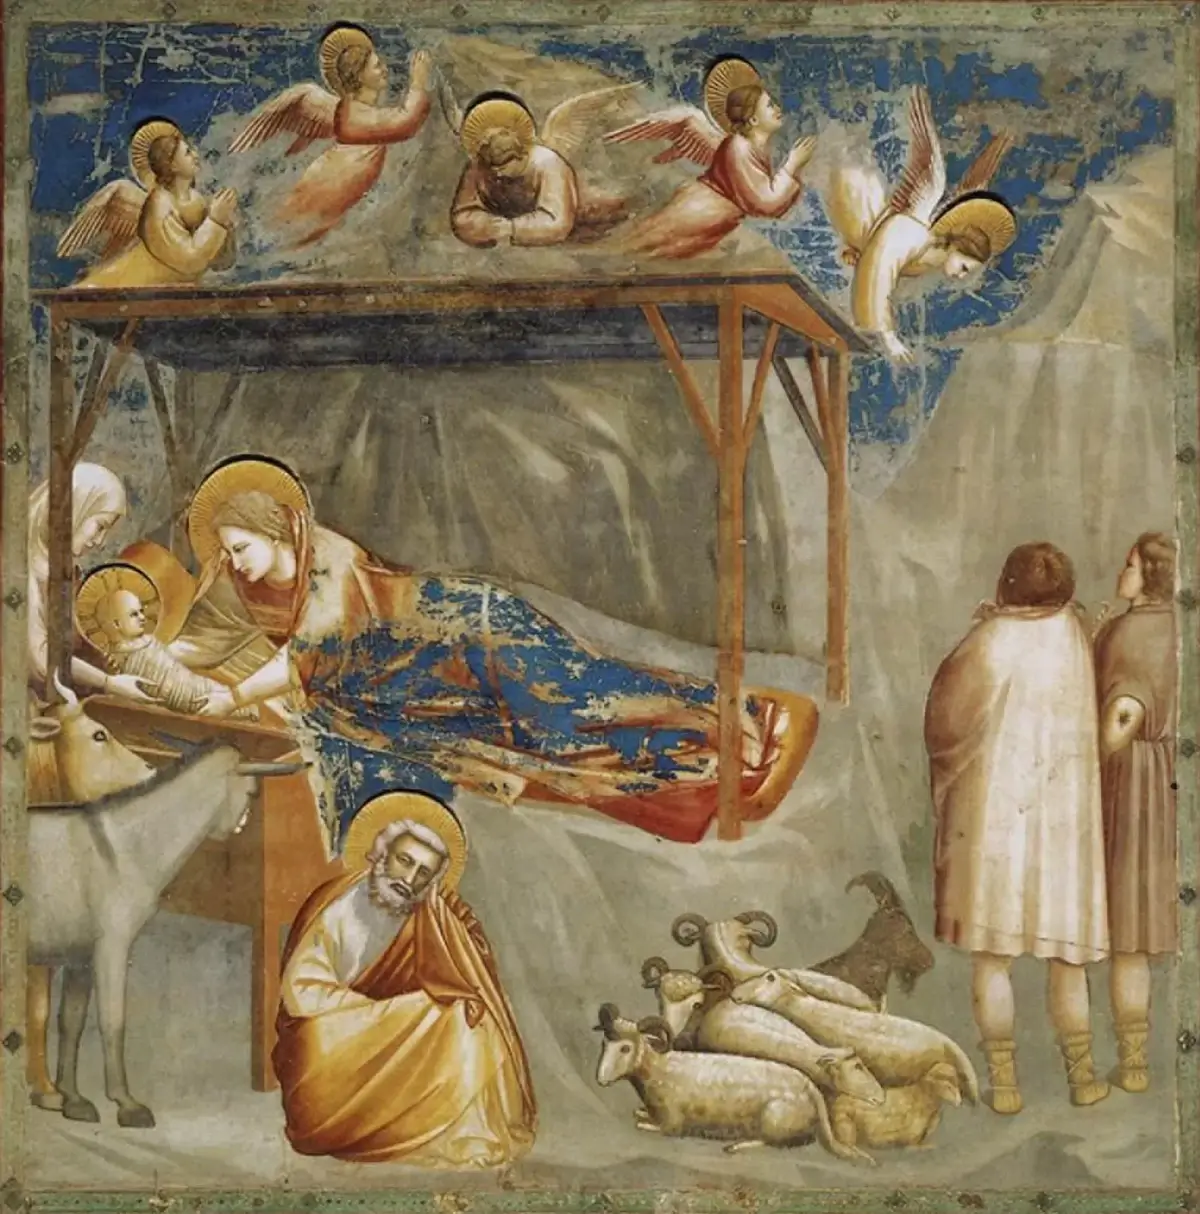 Giotto fresco "The Nativity"